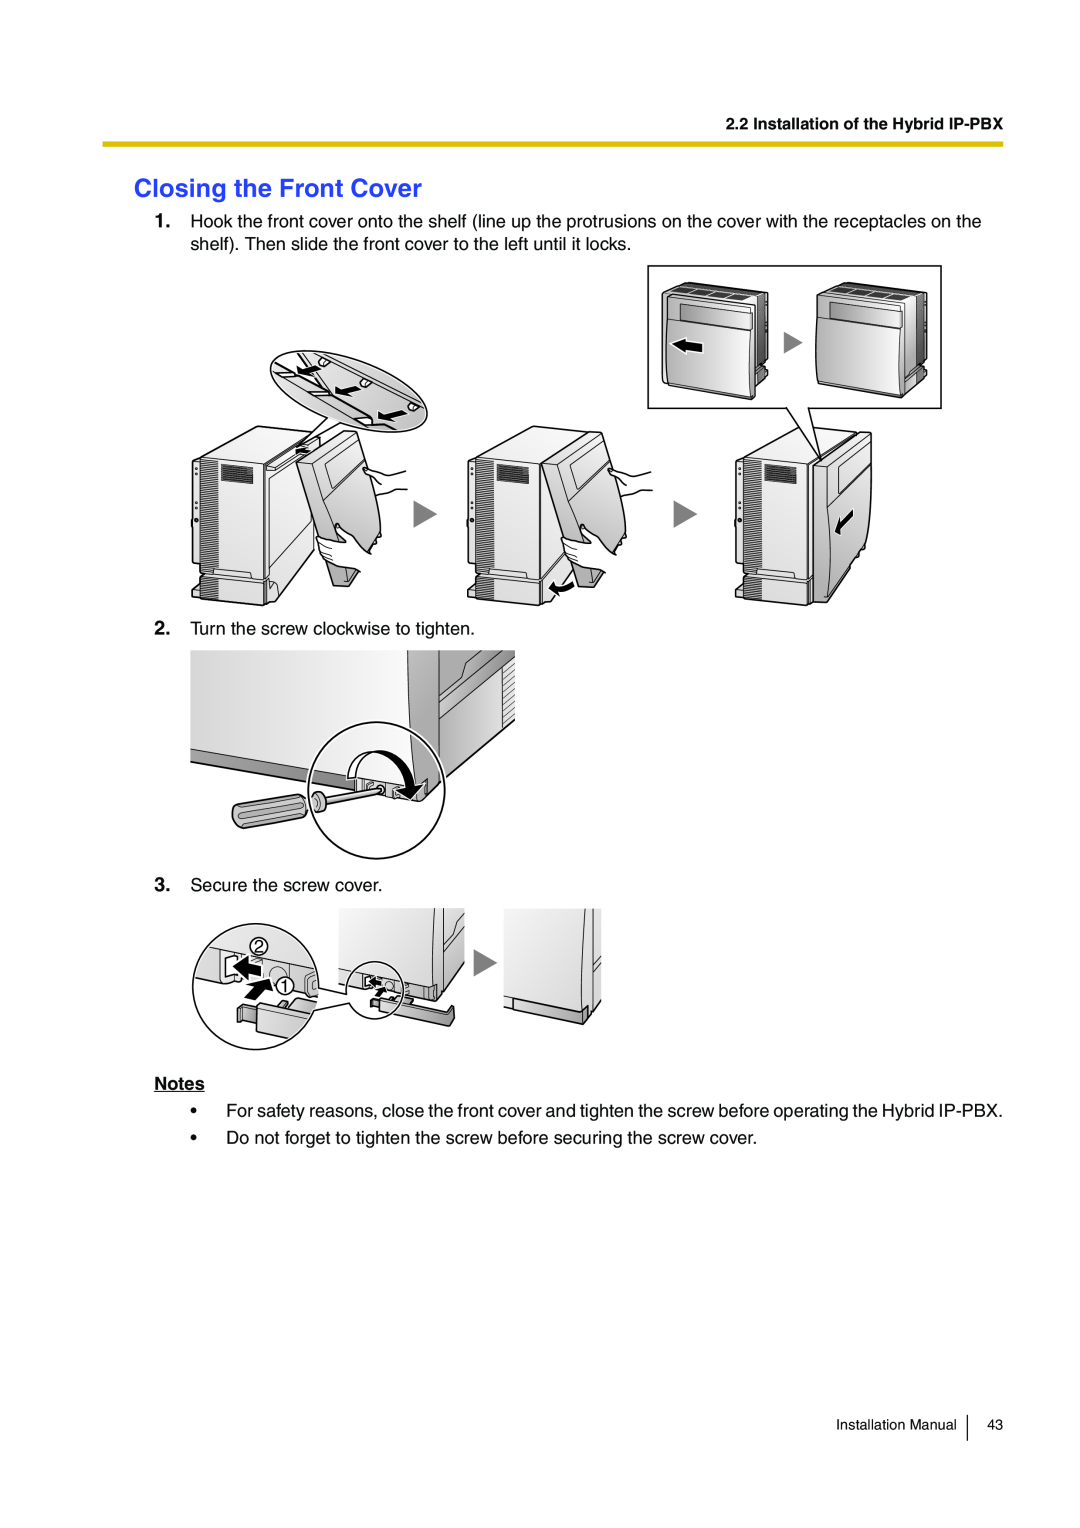 Panasonic KX-TDA100 installation manual Closing the Front Cover 